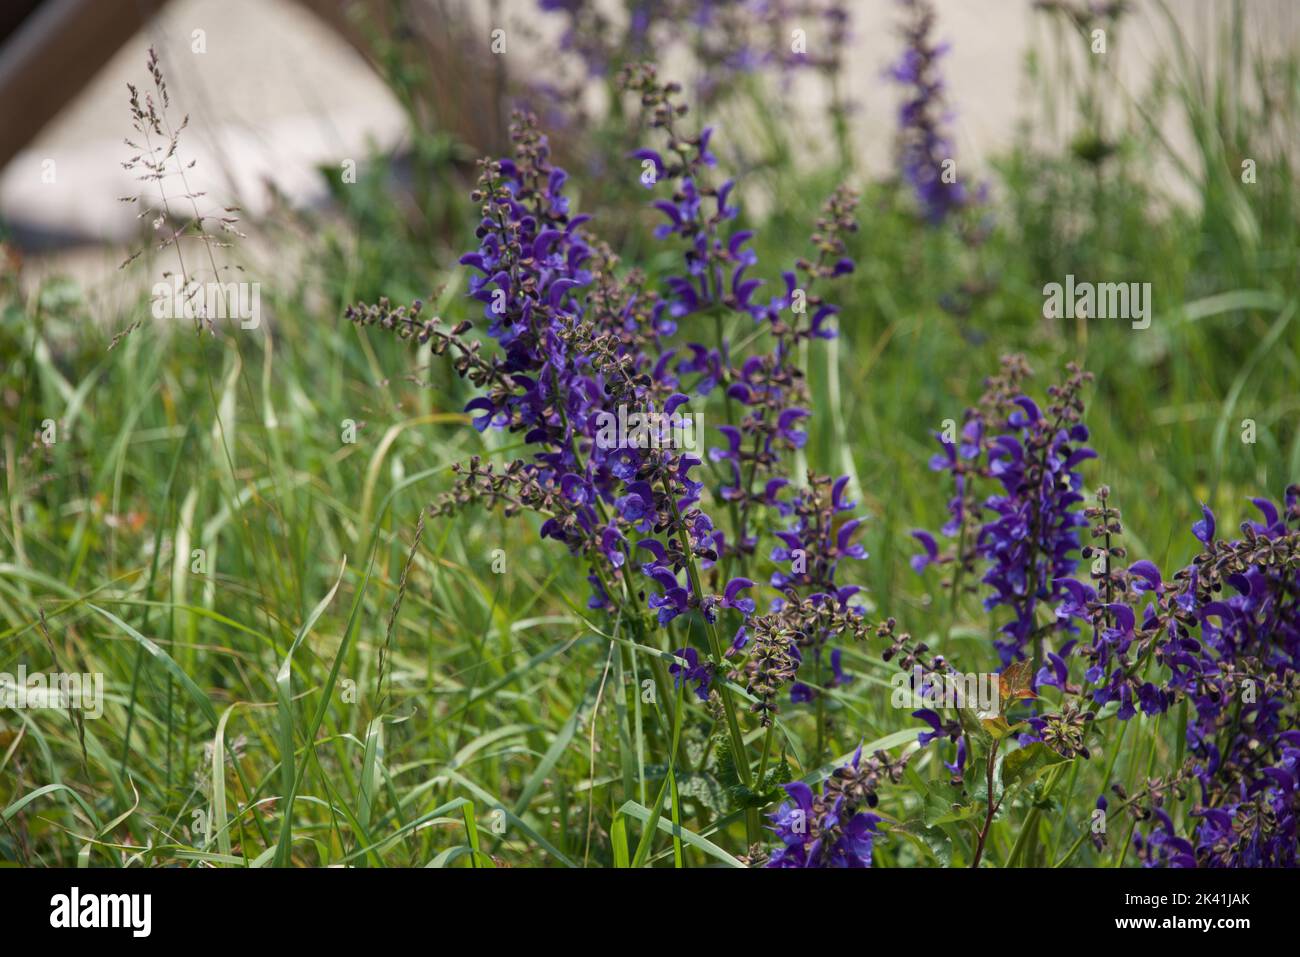 Wild flower - salvia Stock Photo